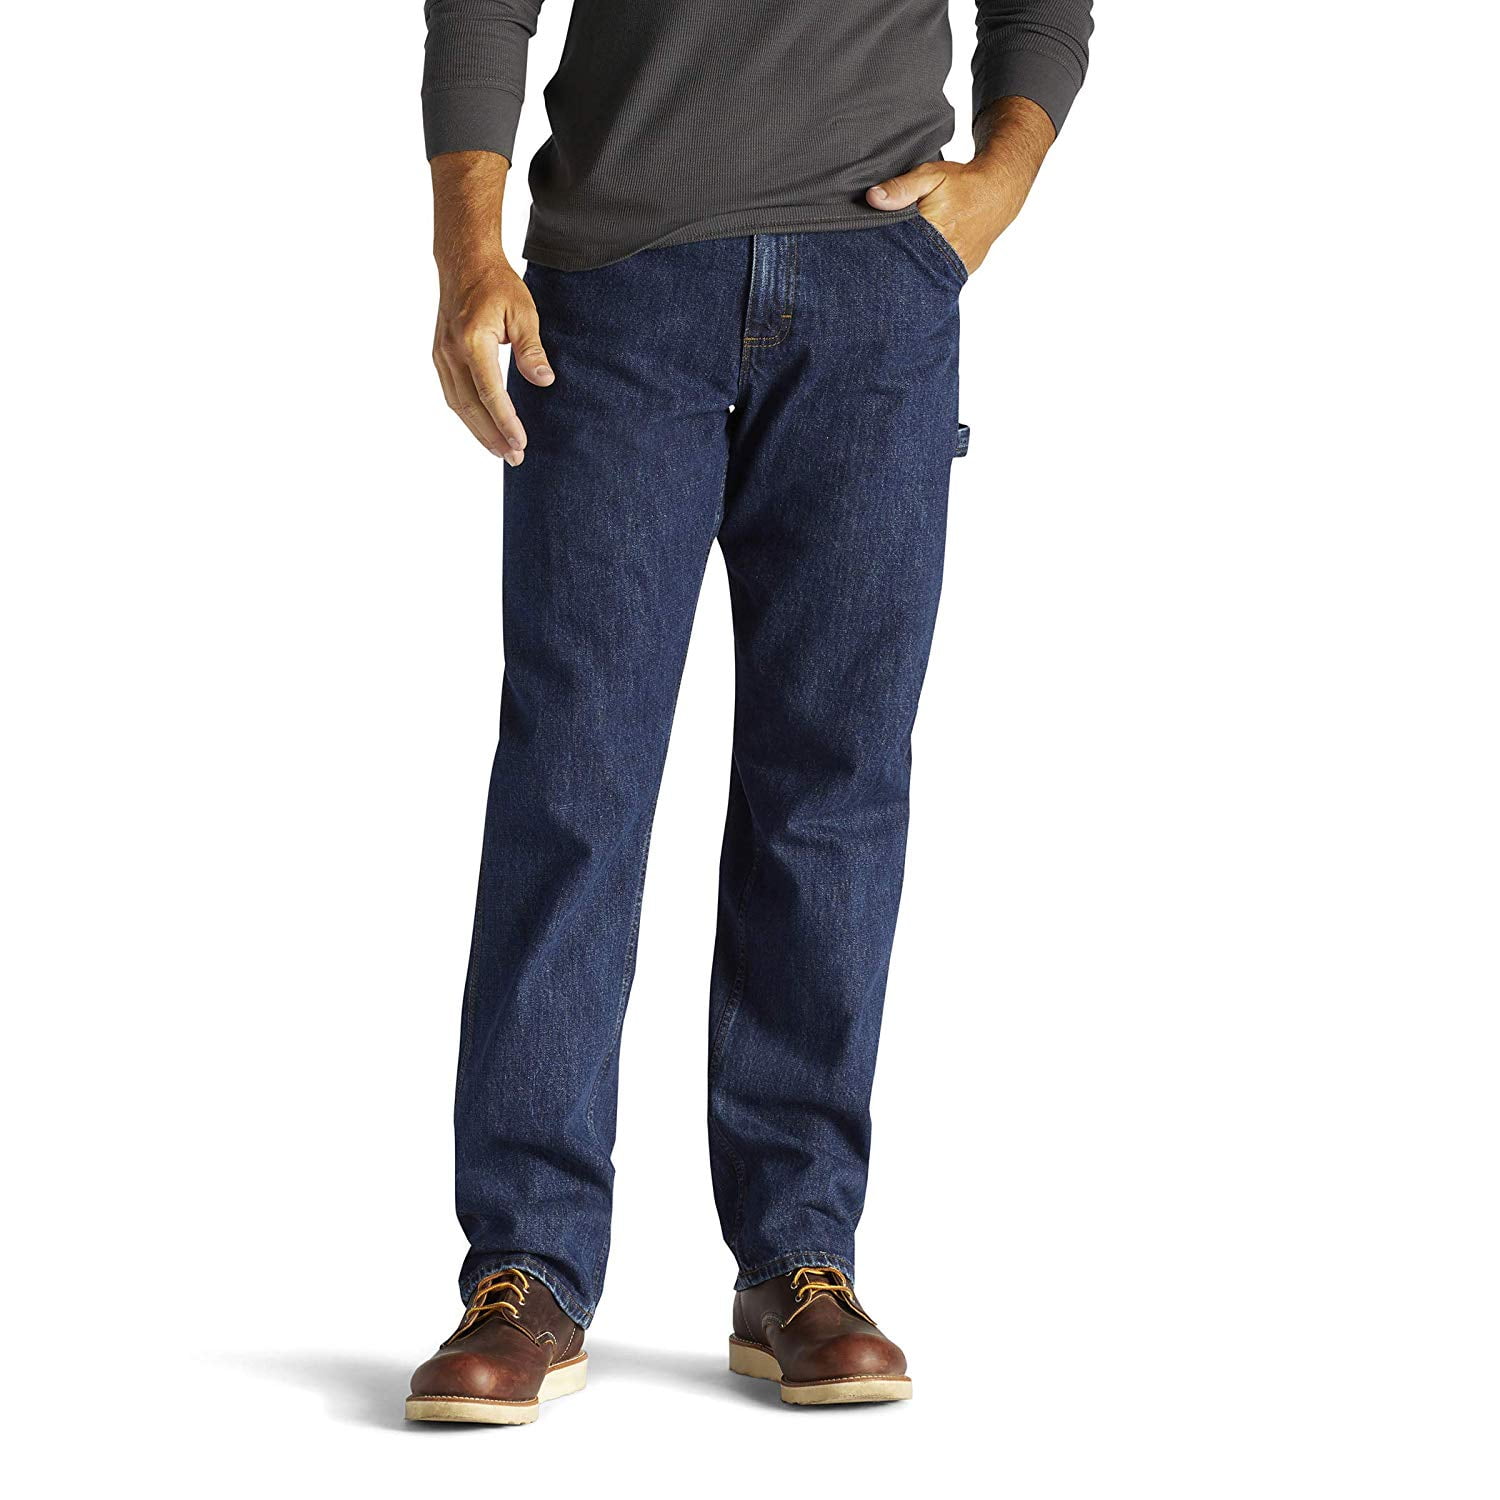 LEE Men's Big-Tall Carpenter Jean, Dark Indigo, 52W x 30L | Walmart Canada